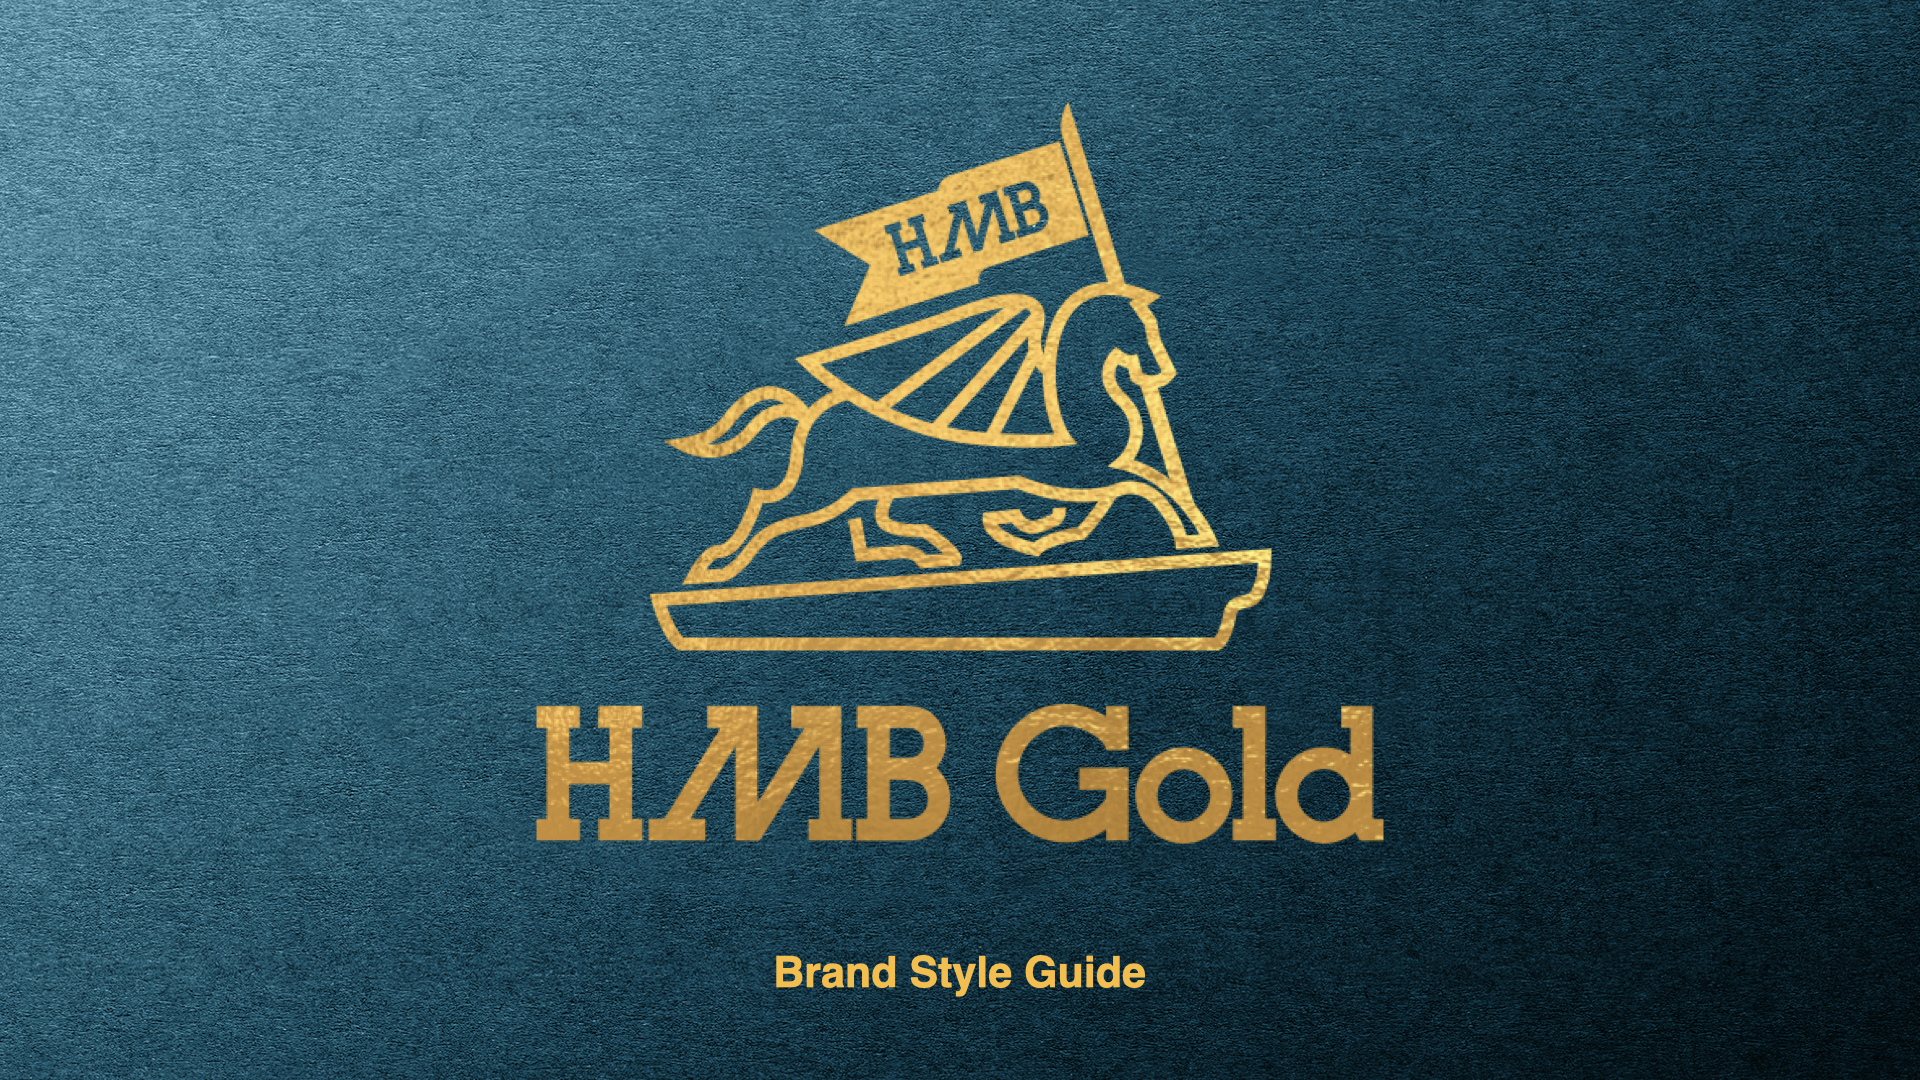 HMB Gold Trading LLC